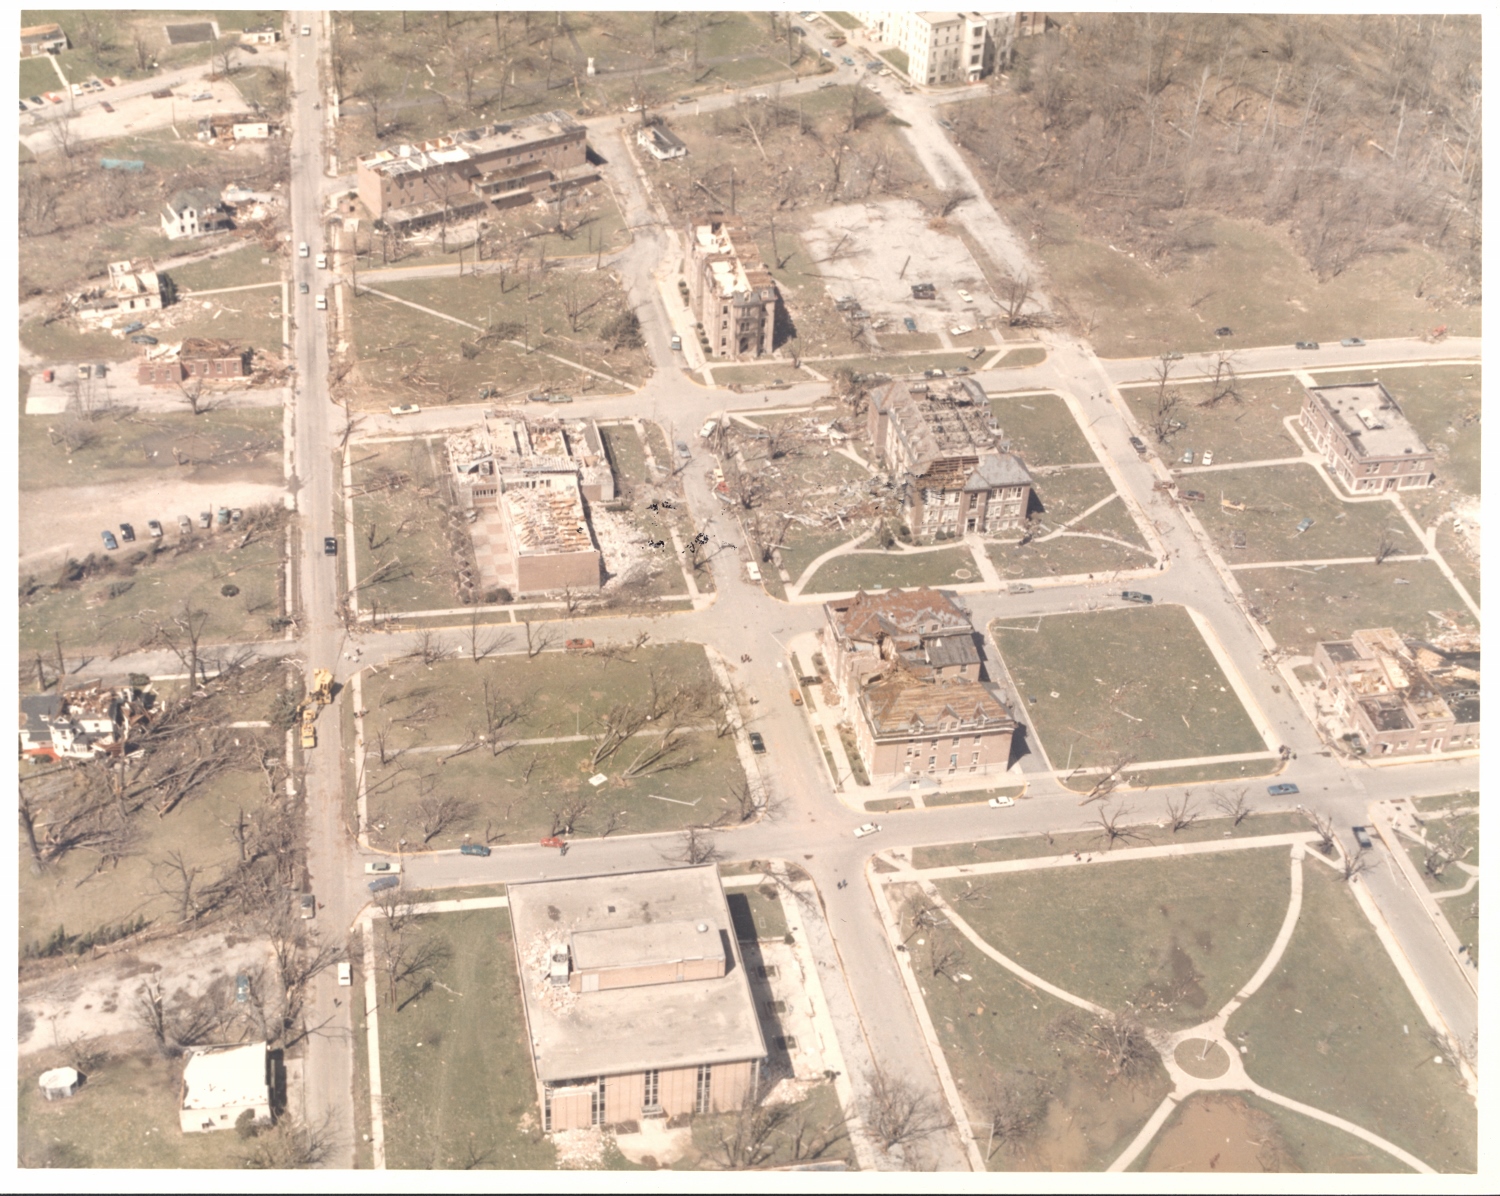 1974 Super Outbreak: Aerial Damage Photos1500 x 1196